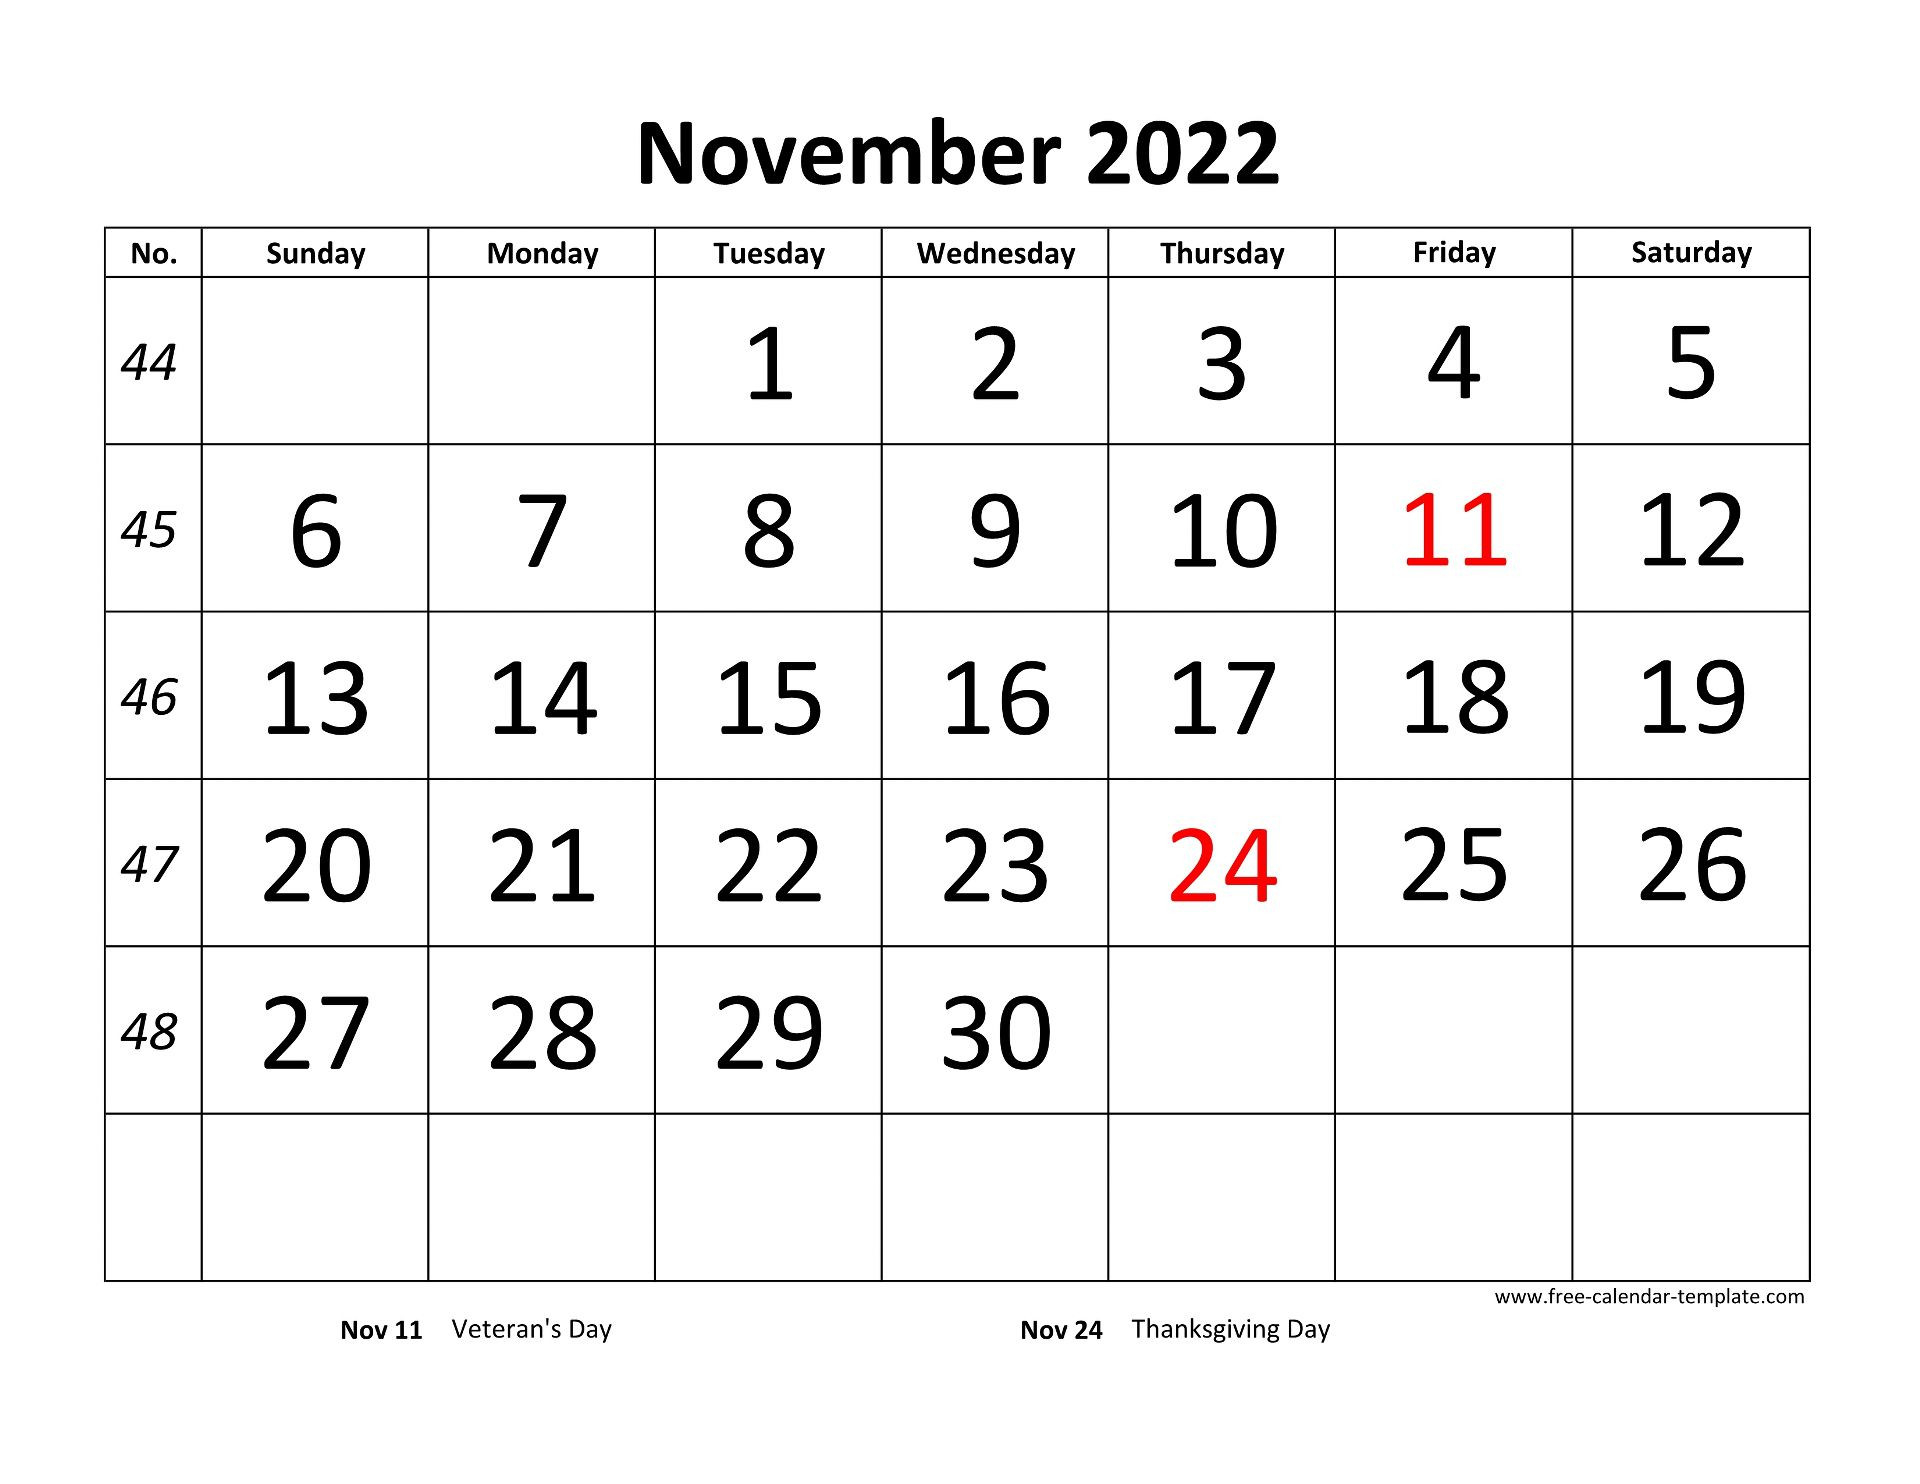 November 2022 Free Calendar Tempplate | Free-Calendar-Template  November And December 2022 Calendar